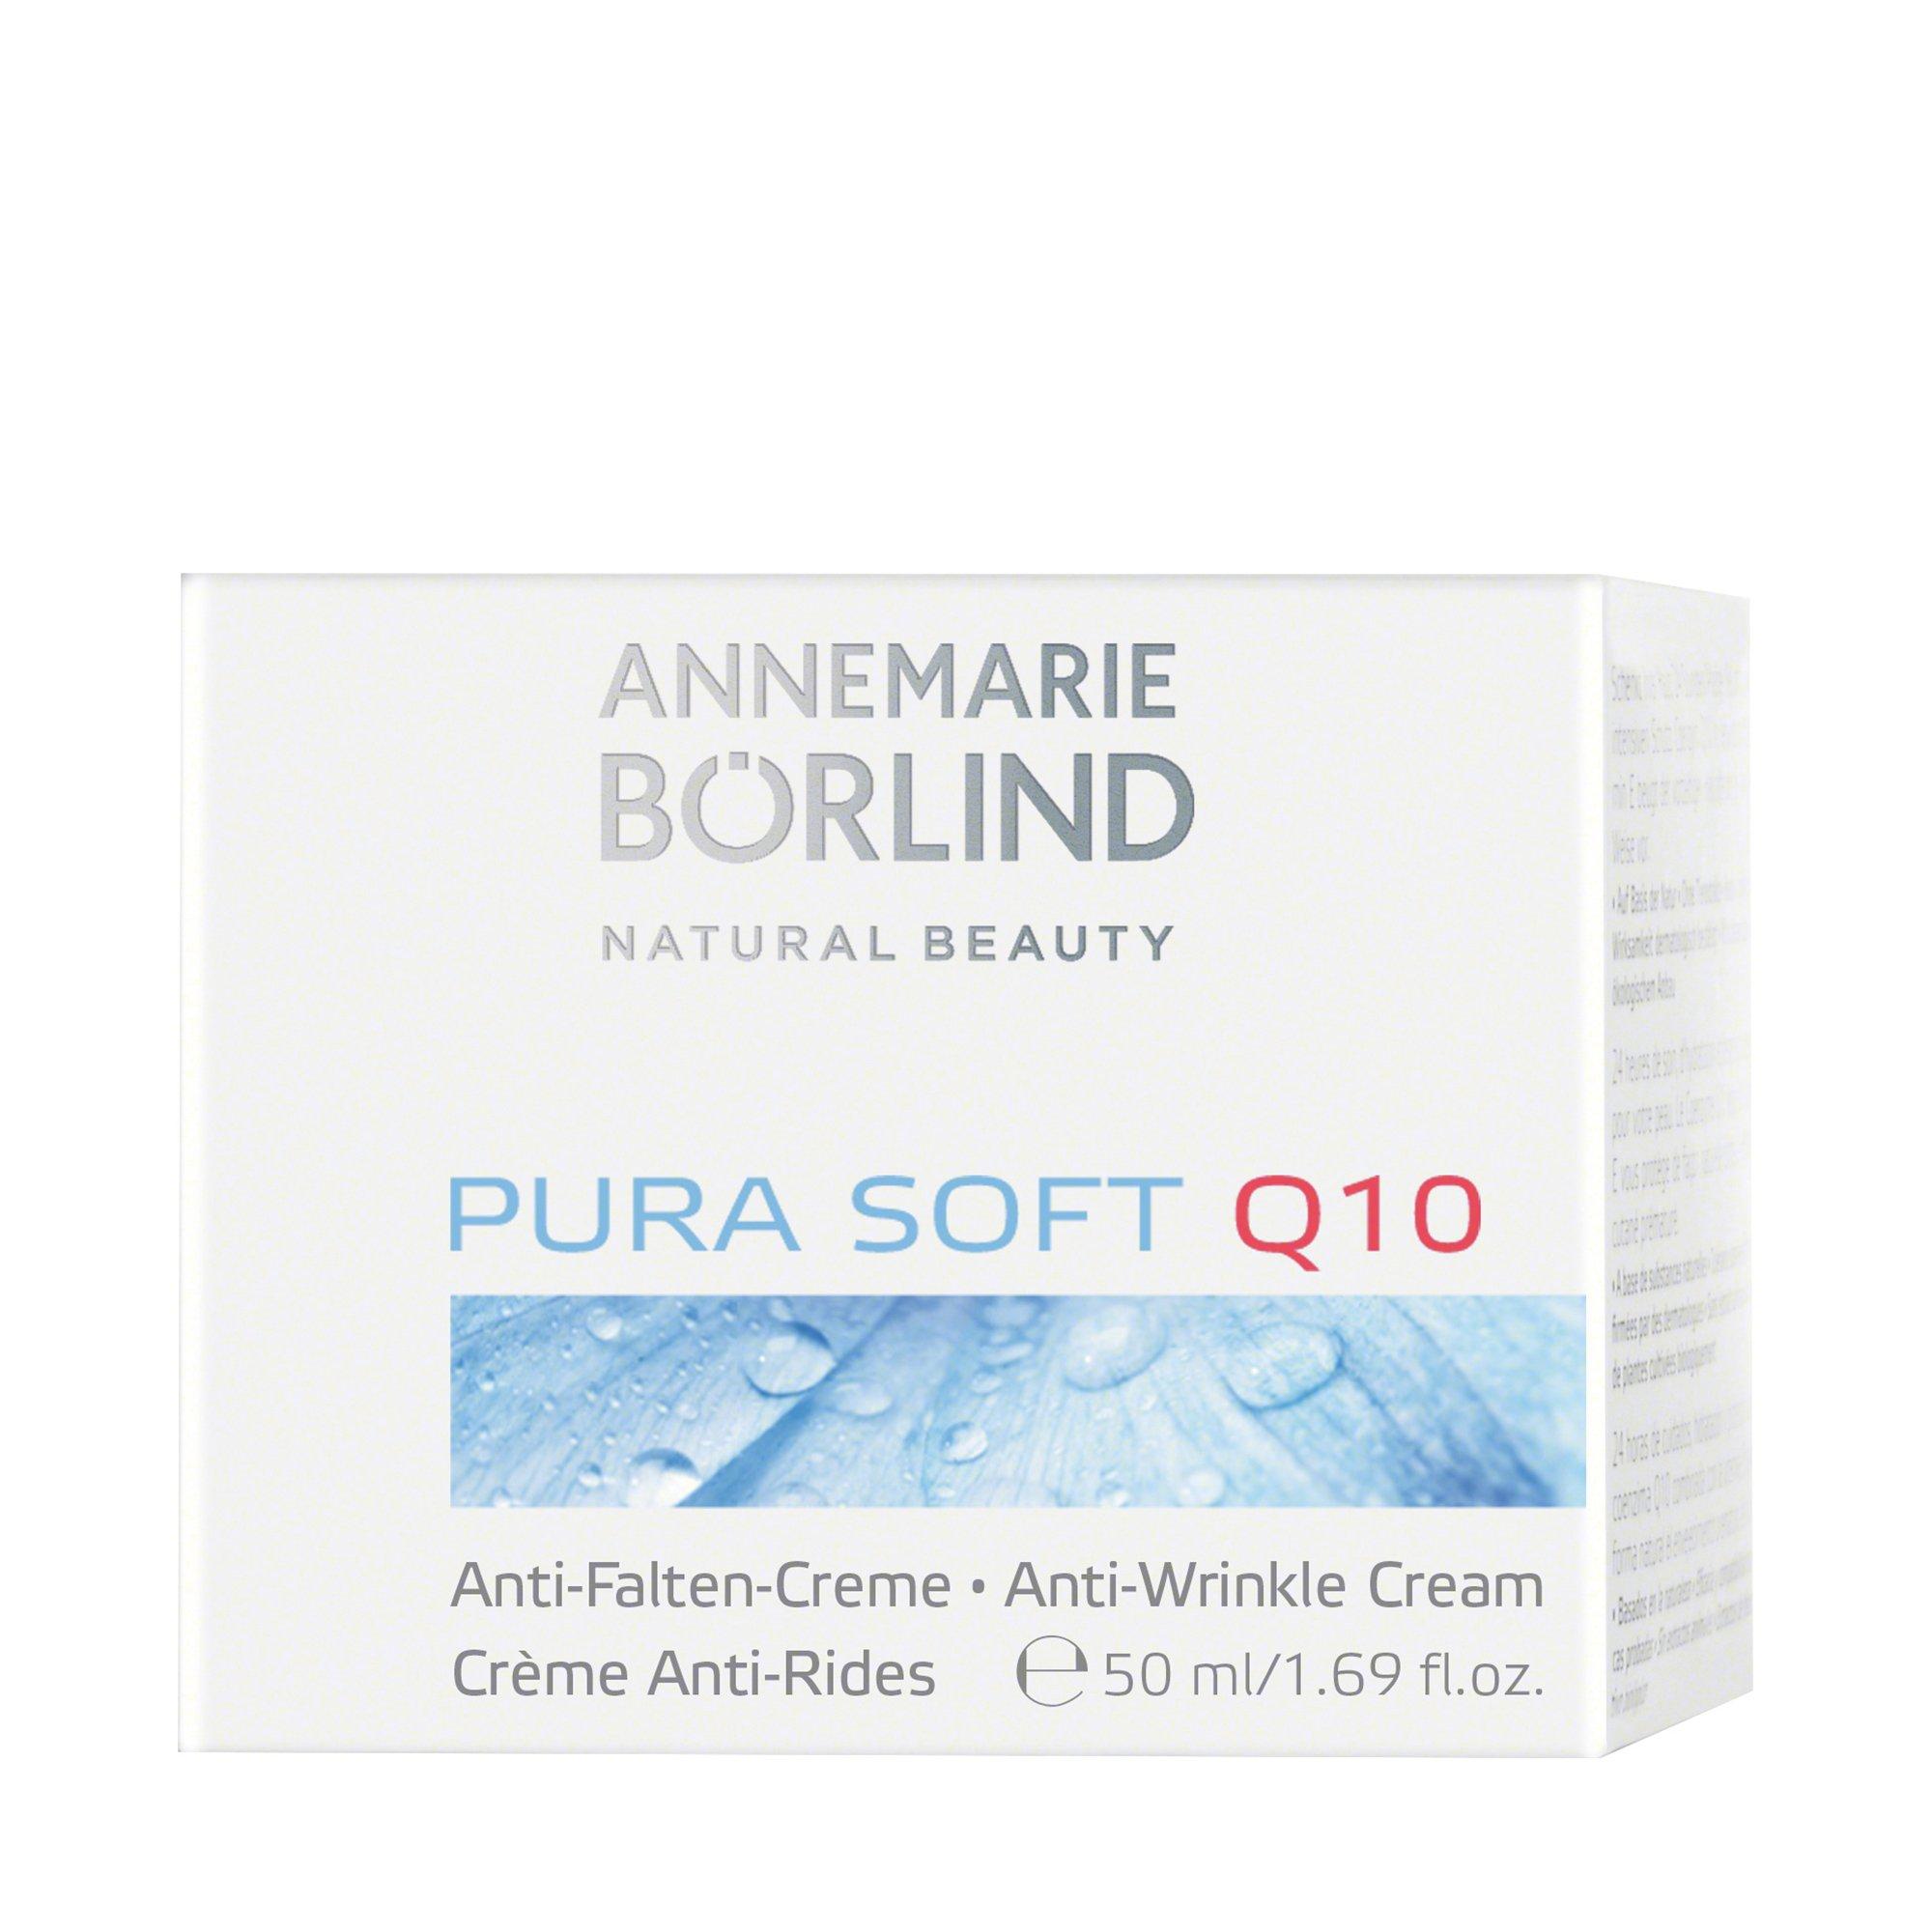 Annemarie Börlind Pura Soft Q10 Anti-Falten-Creme Pura Soft Q10 Anti-Falten-Creme 